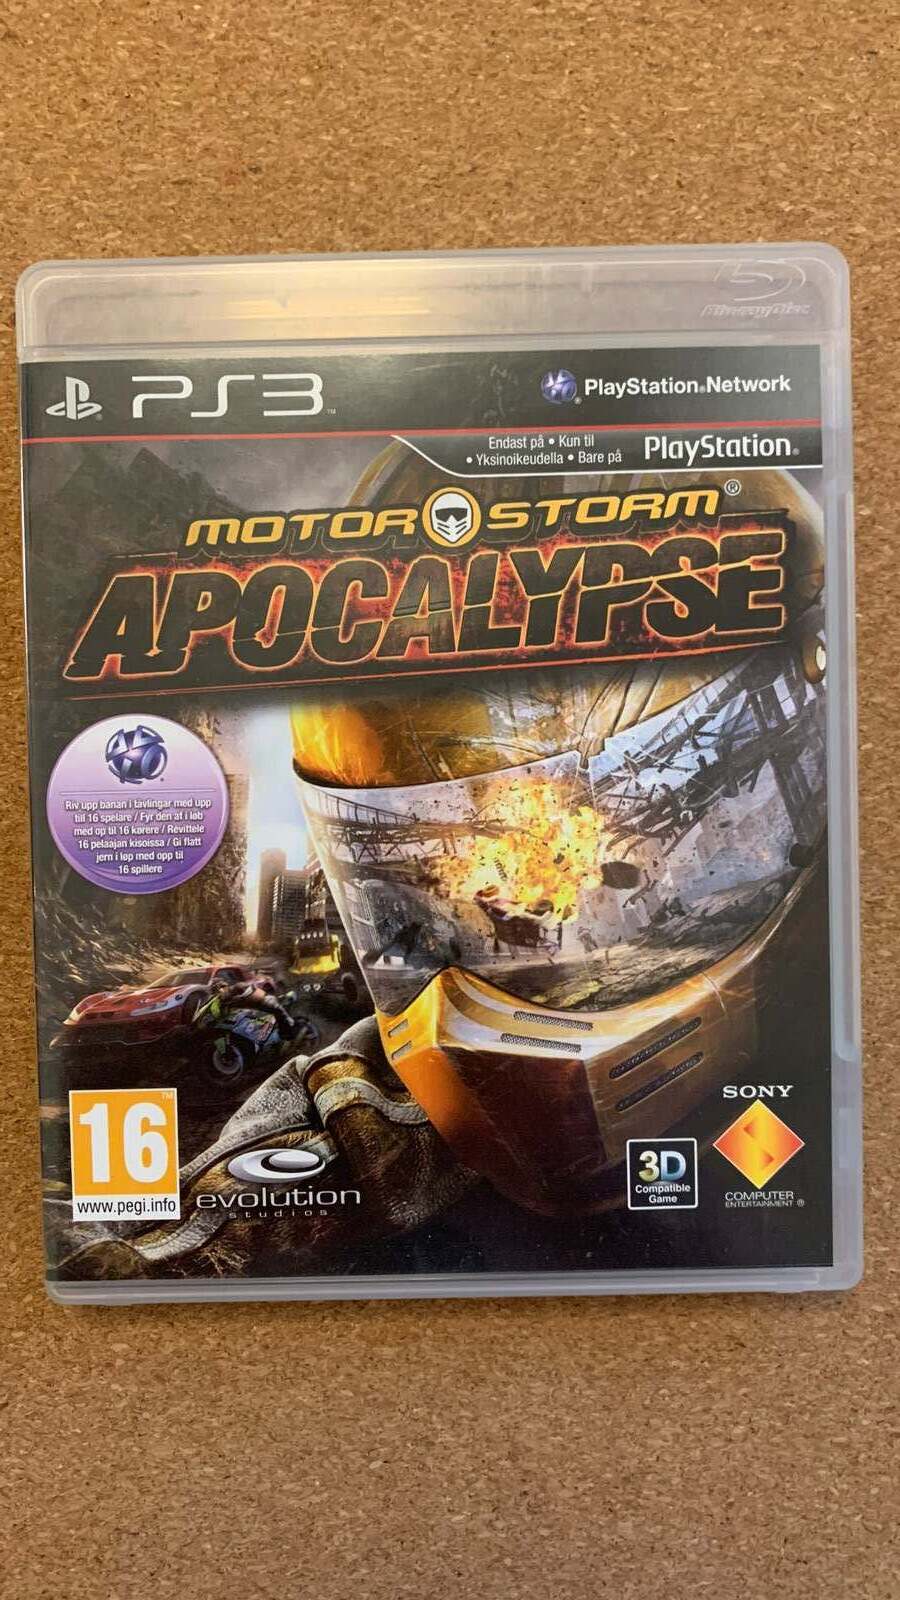 Motor storm apocalypse, PS3, racing